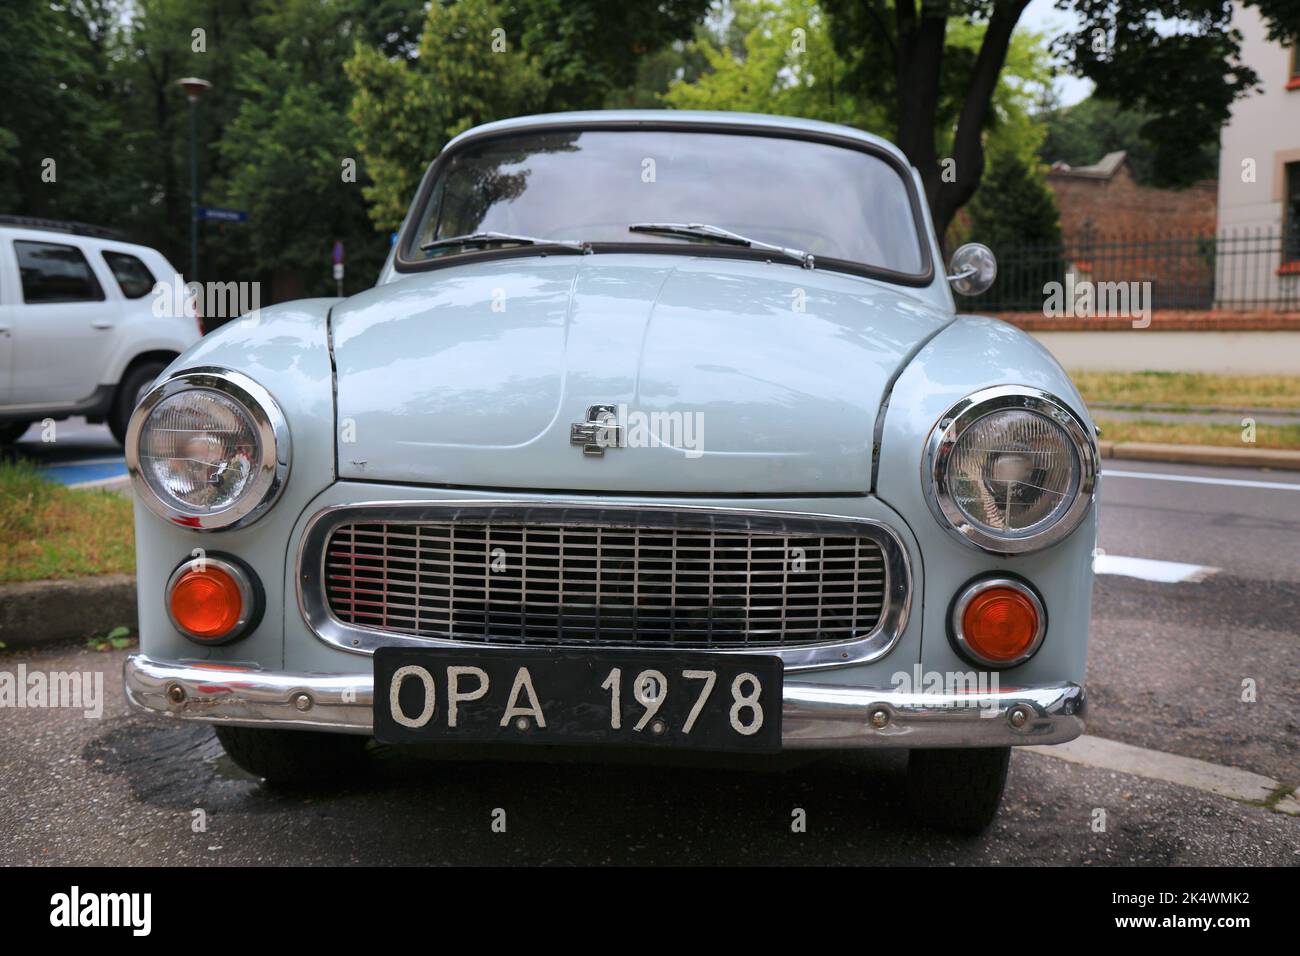 KRAKOW, POLAND - JULY 3, 2021: FSO Syrena 105 vintage Polish car parked in Krakow. The car is a symbol of Polish car industry. Stock Photo